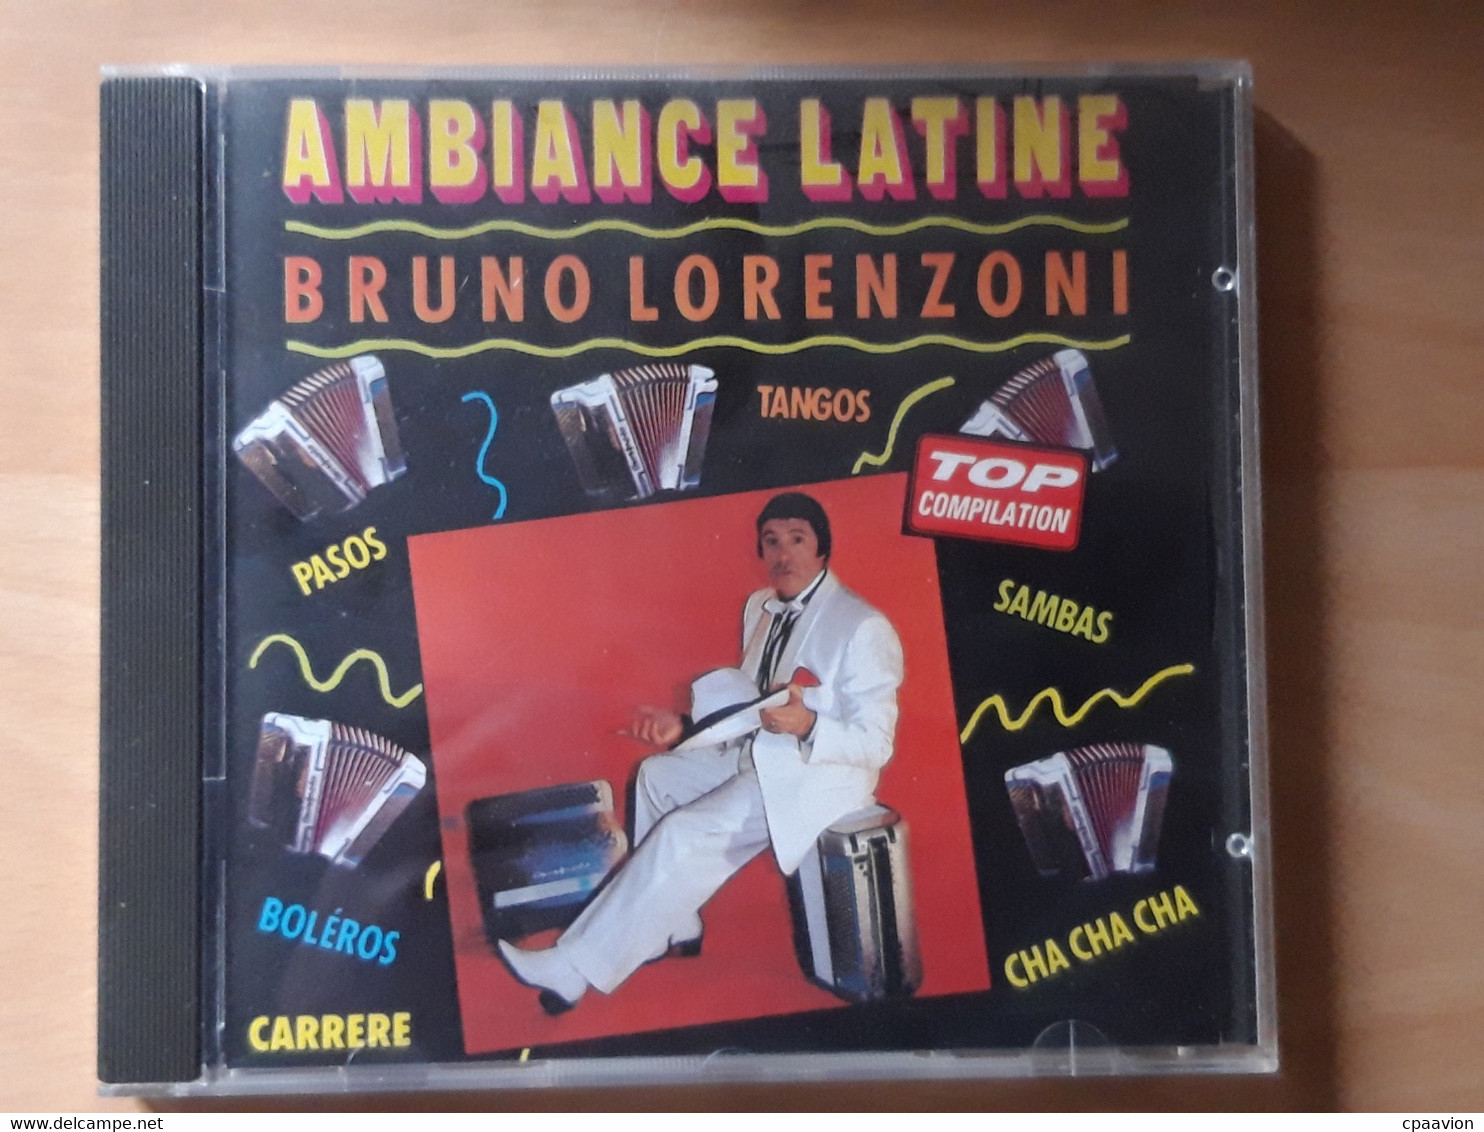 BRUNO LORENZONI; AMBIANCE LATINE - Instrumental